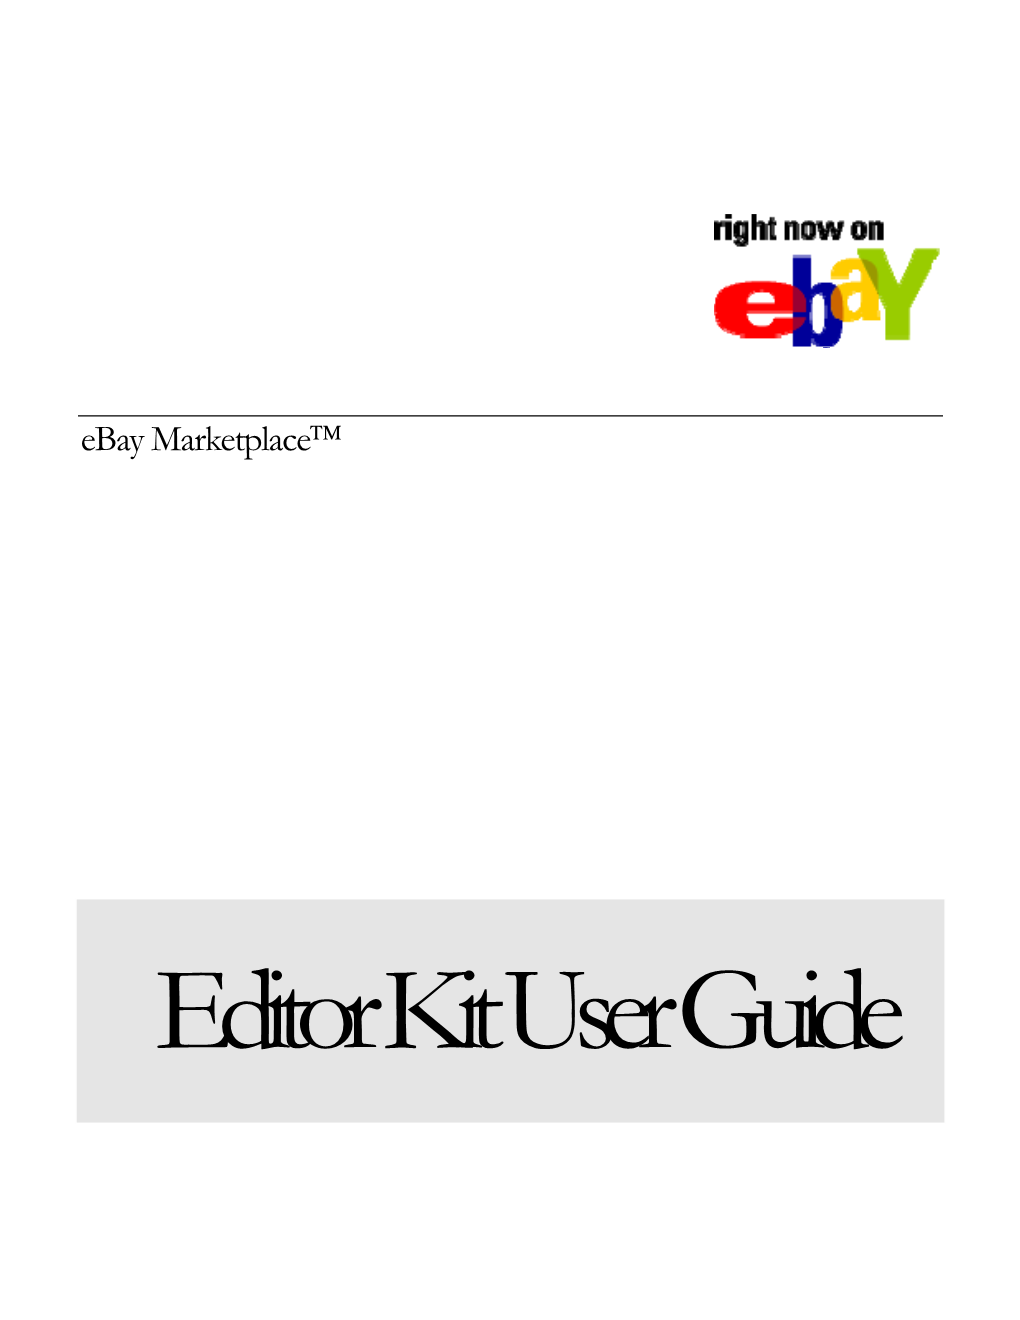 Editor Kit User Guide Ebay Marketplace™ Editor Kit User Guide